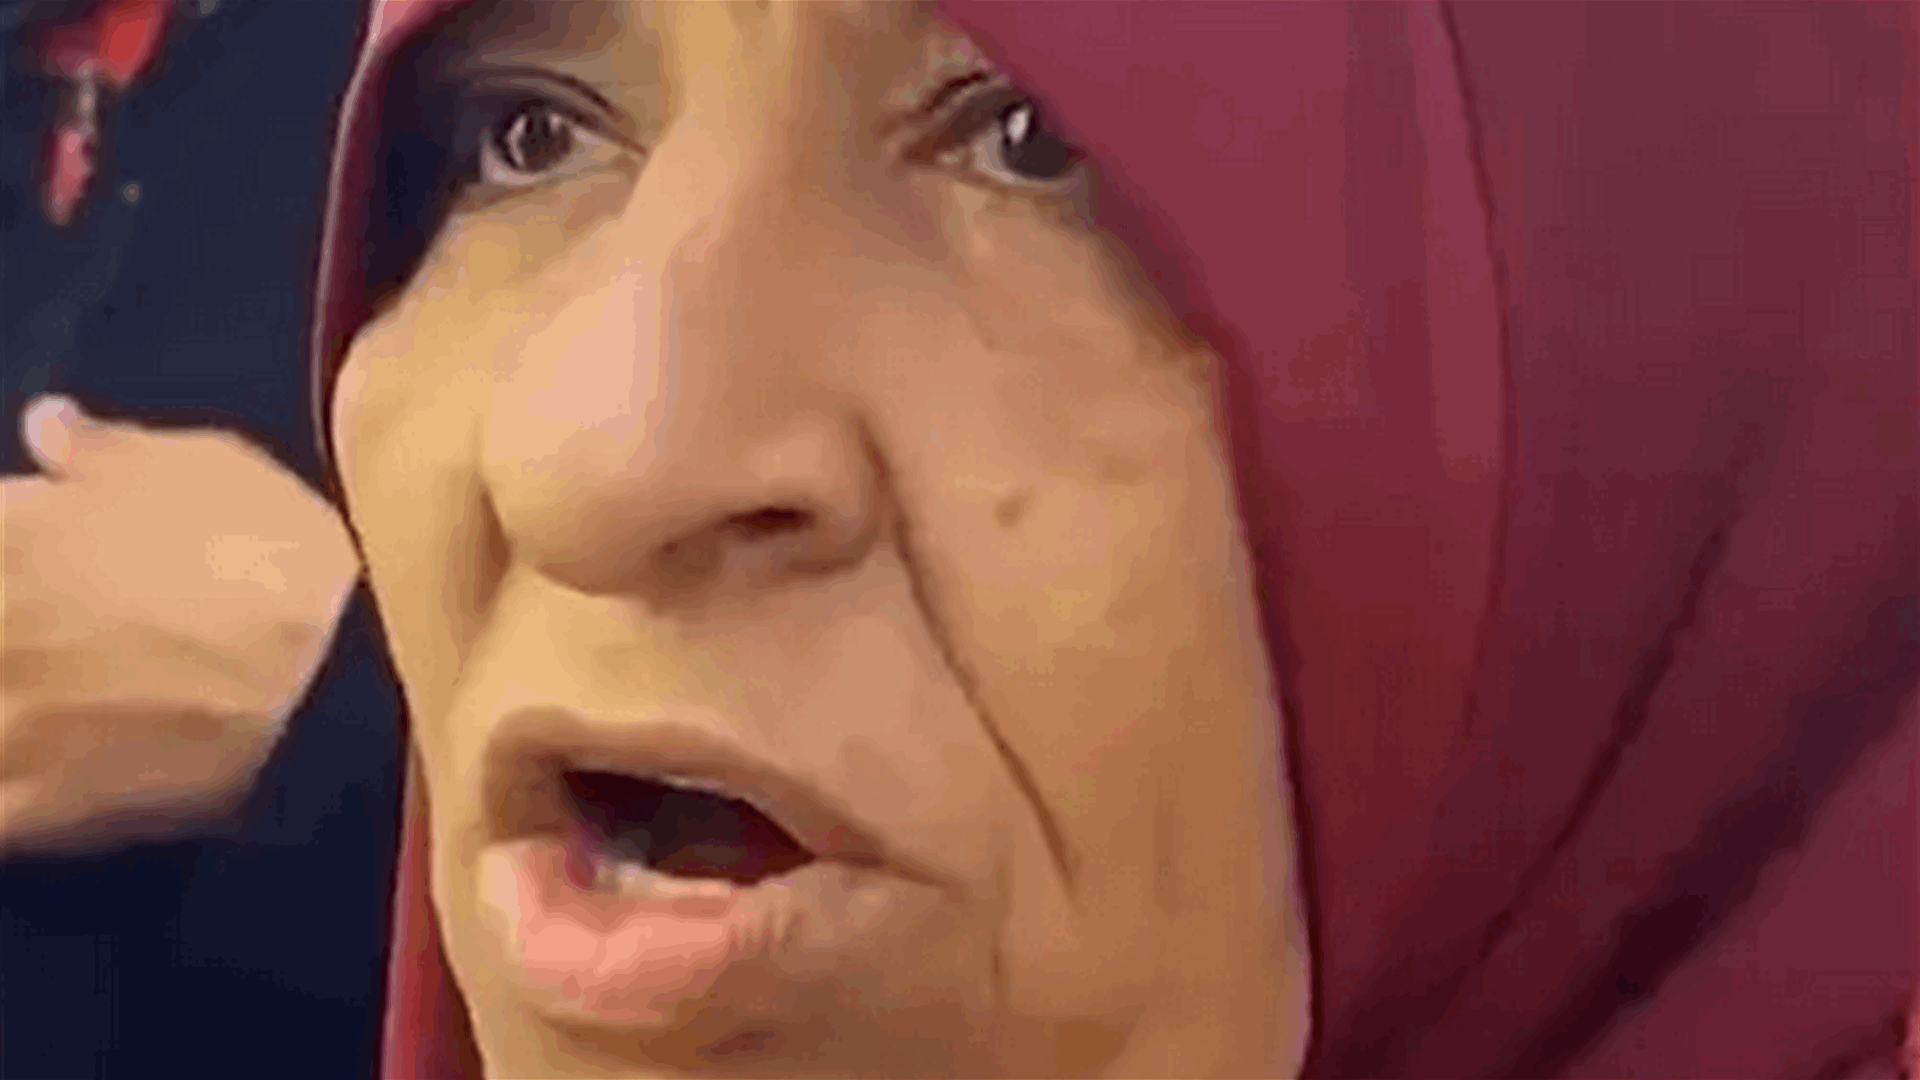 &quot;ماحد يقدر يشتري لقمة يأكلها&quot;...صرخة امرأة نازحة ترجمت معاناة الفلسطينيين! (فيديو)